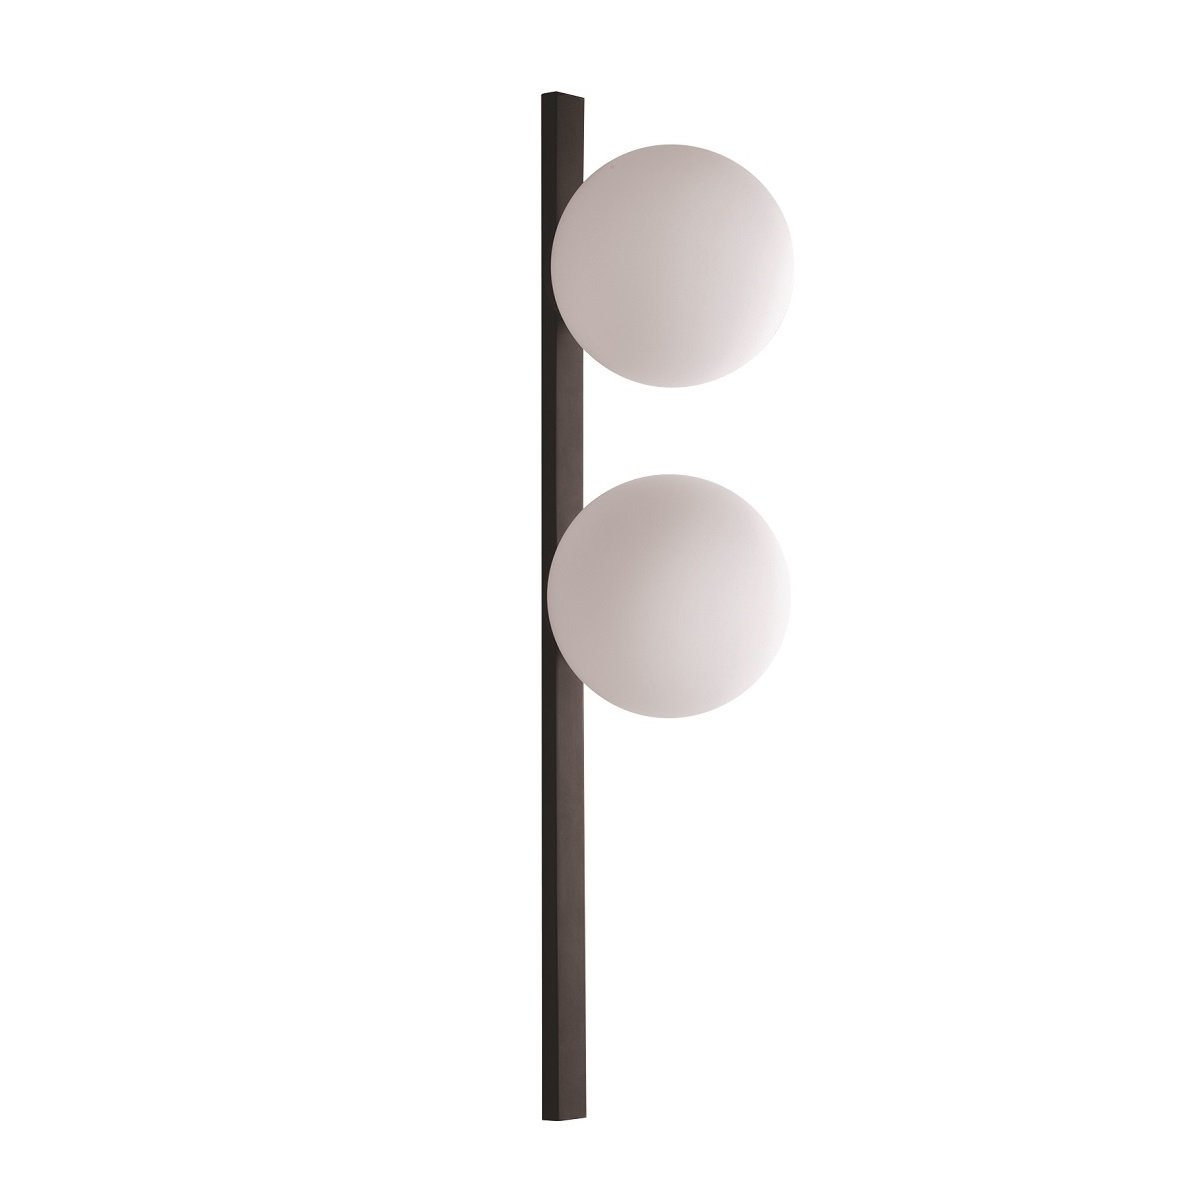 Luce Design Pluto 9110 AP2 ECO Shop Lampen Light Leuchten --> Nero & online 2-flammig kaufen im Wandleuchte